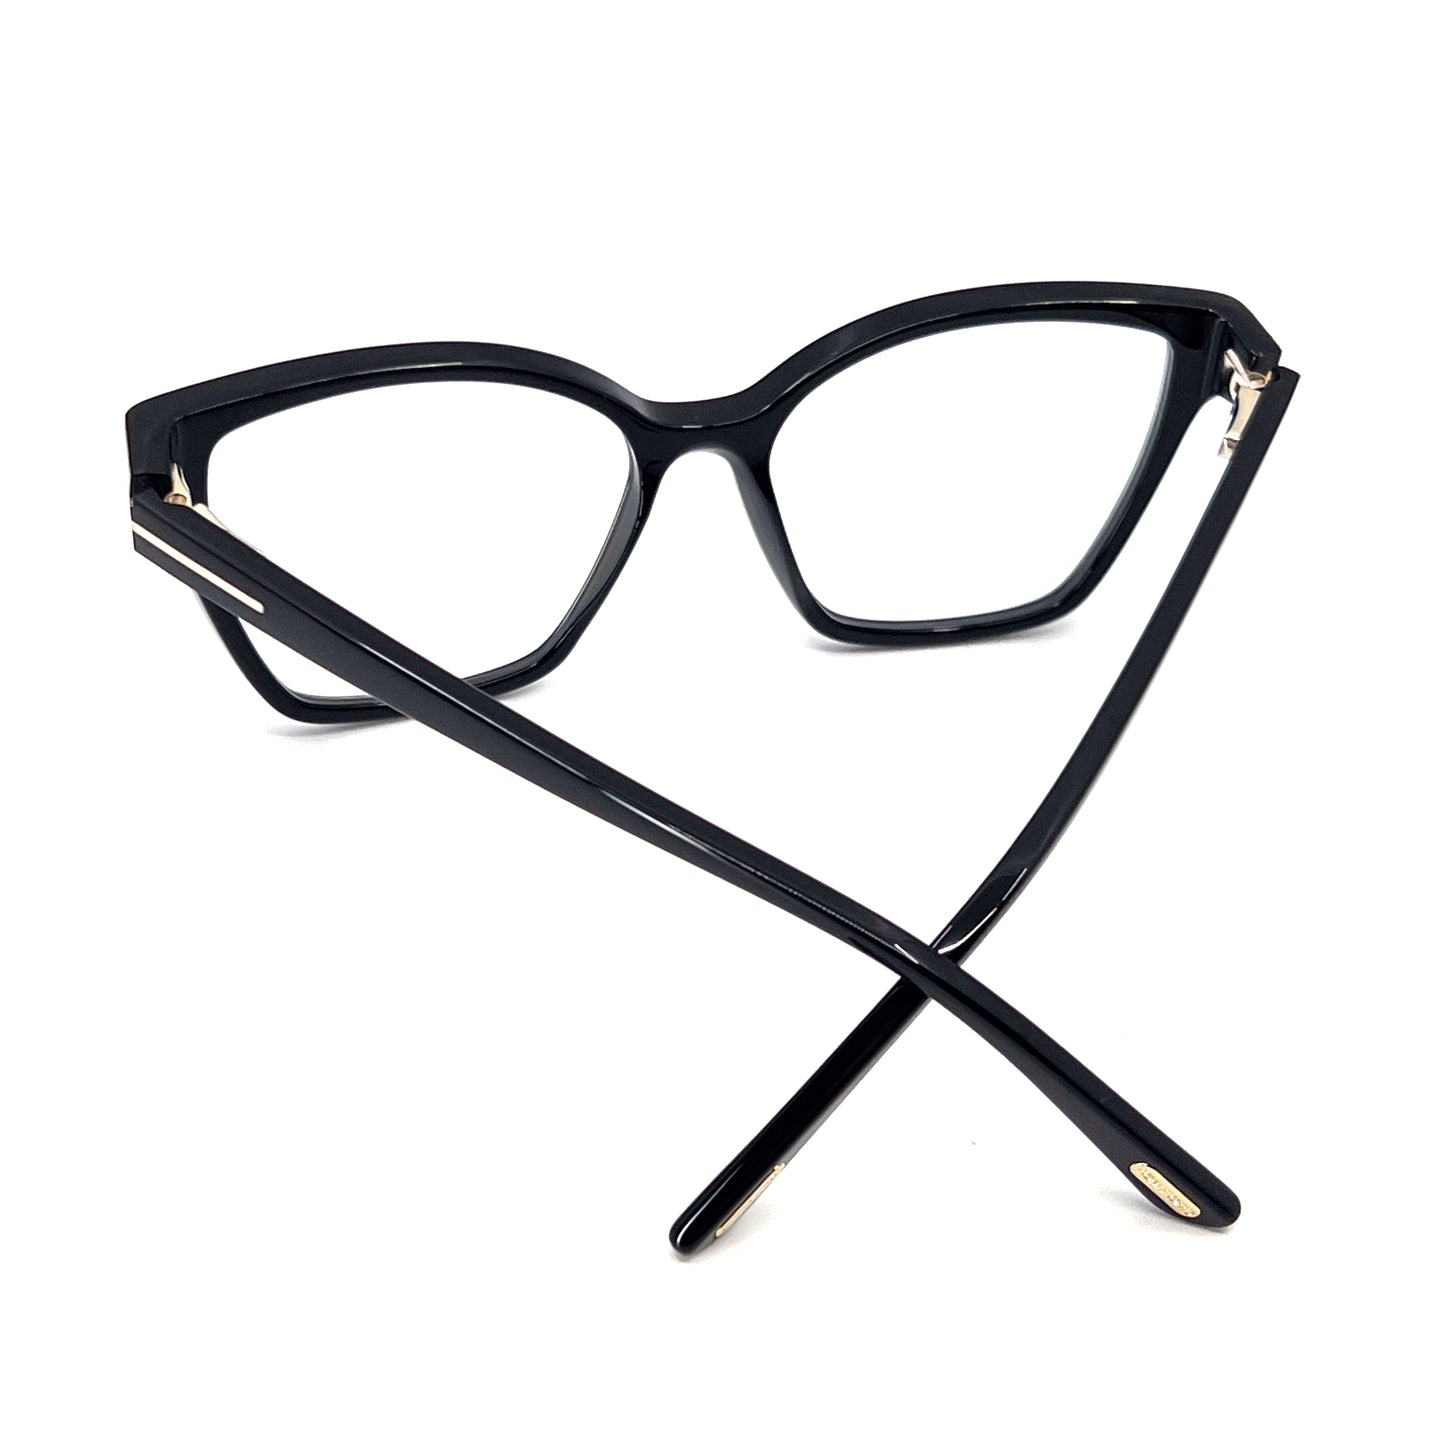 TOM FORD Clip-On Sunglasses/Eyeglasses TF5641-B 00